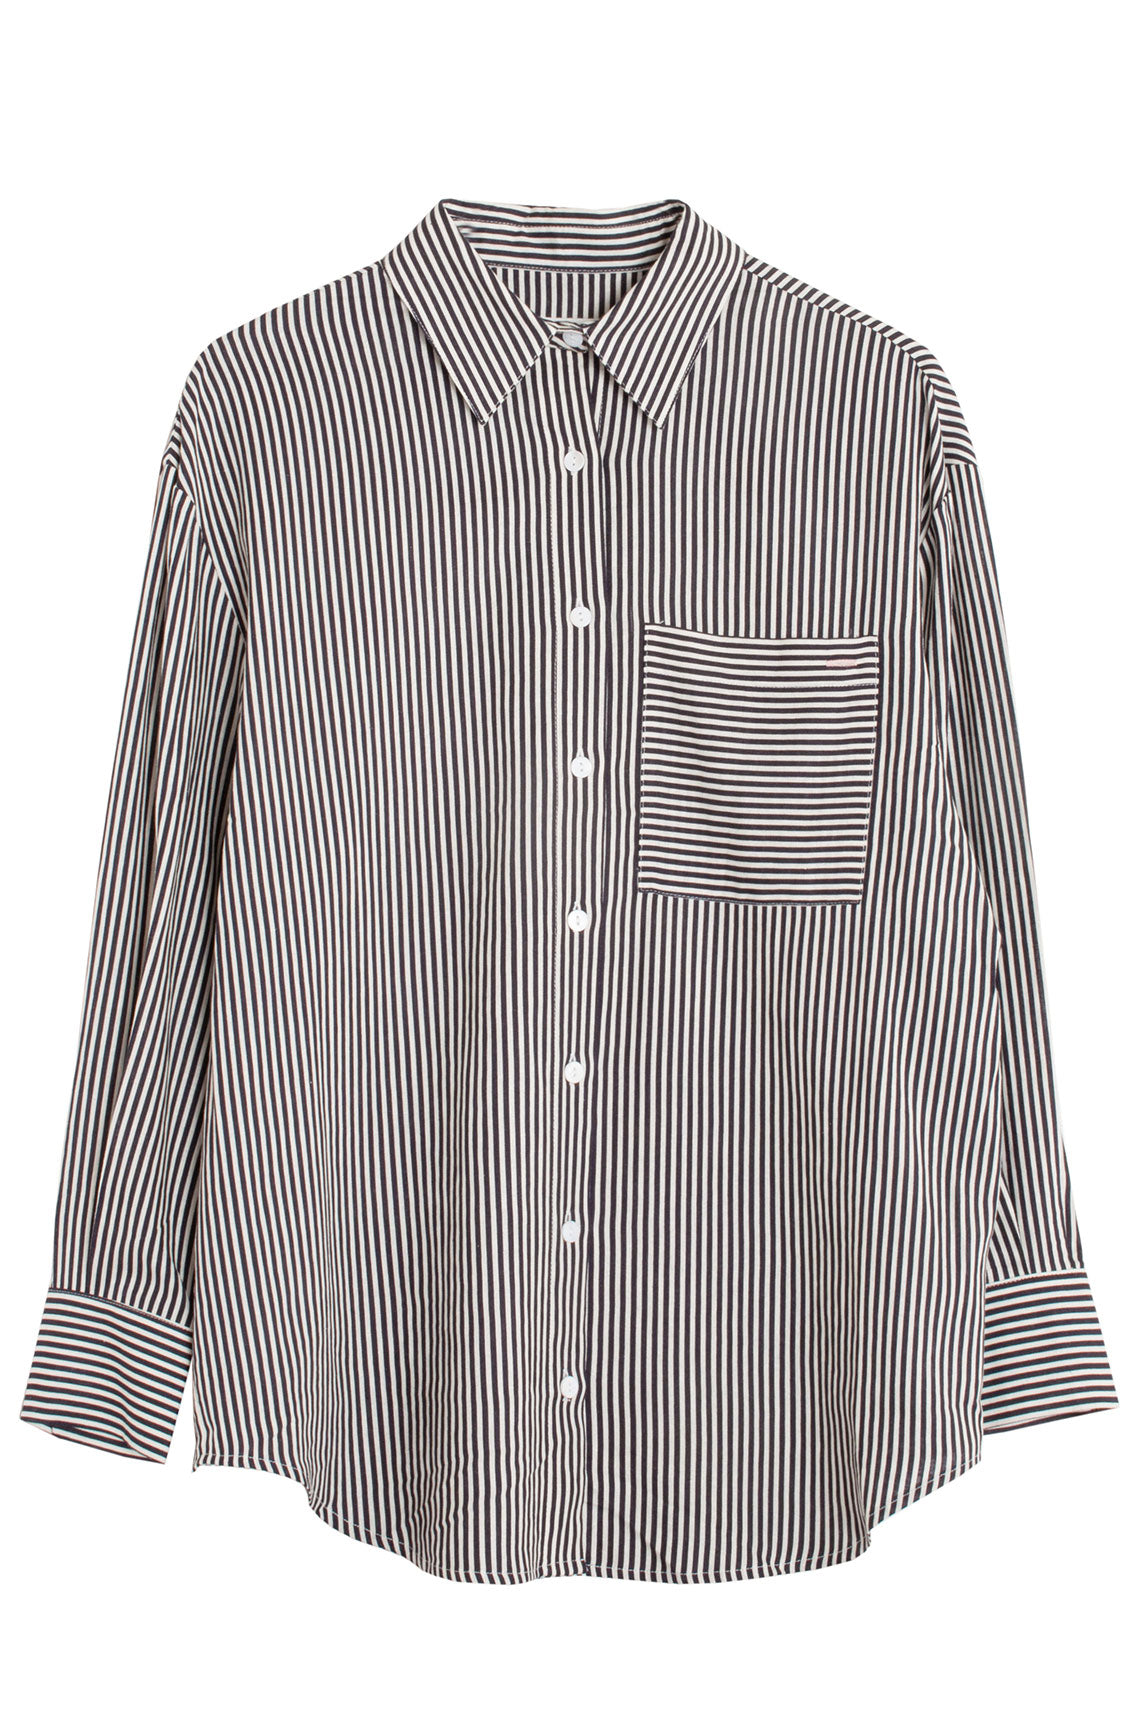 Capri Stripe Becca Shirt